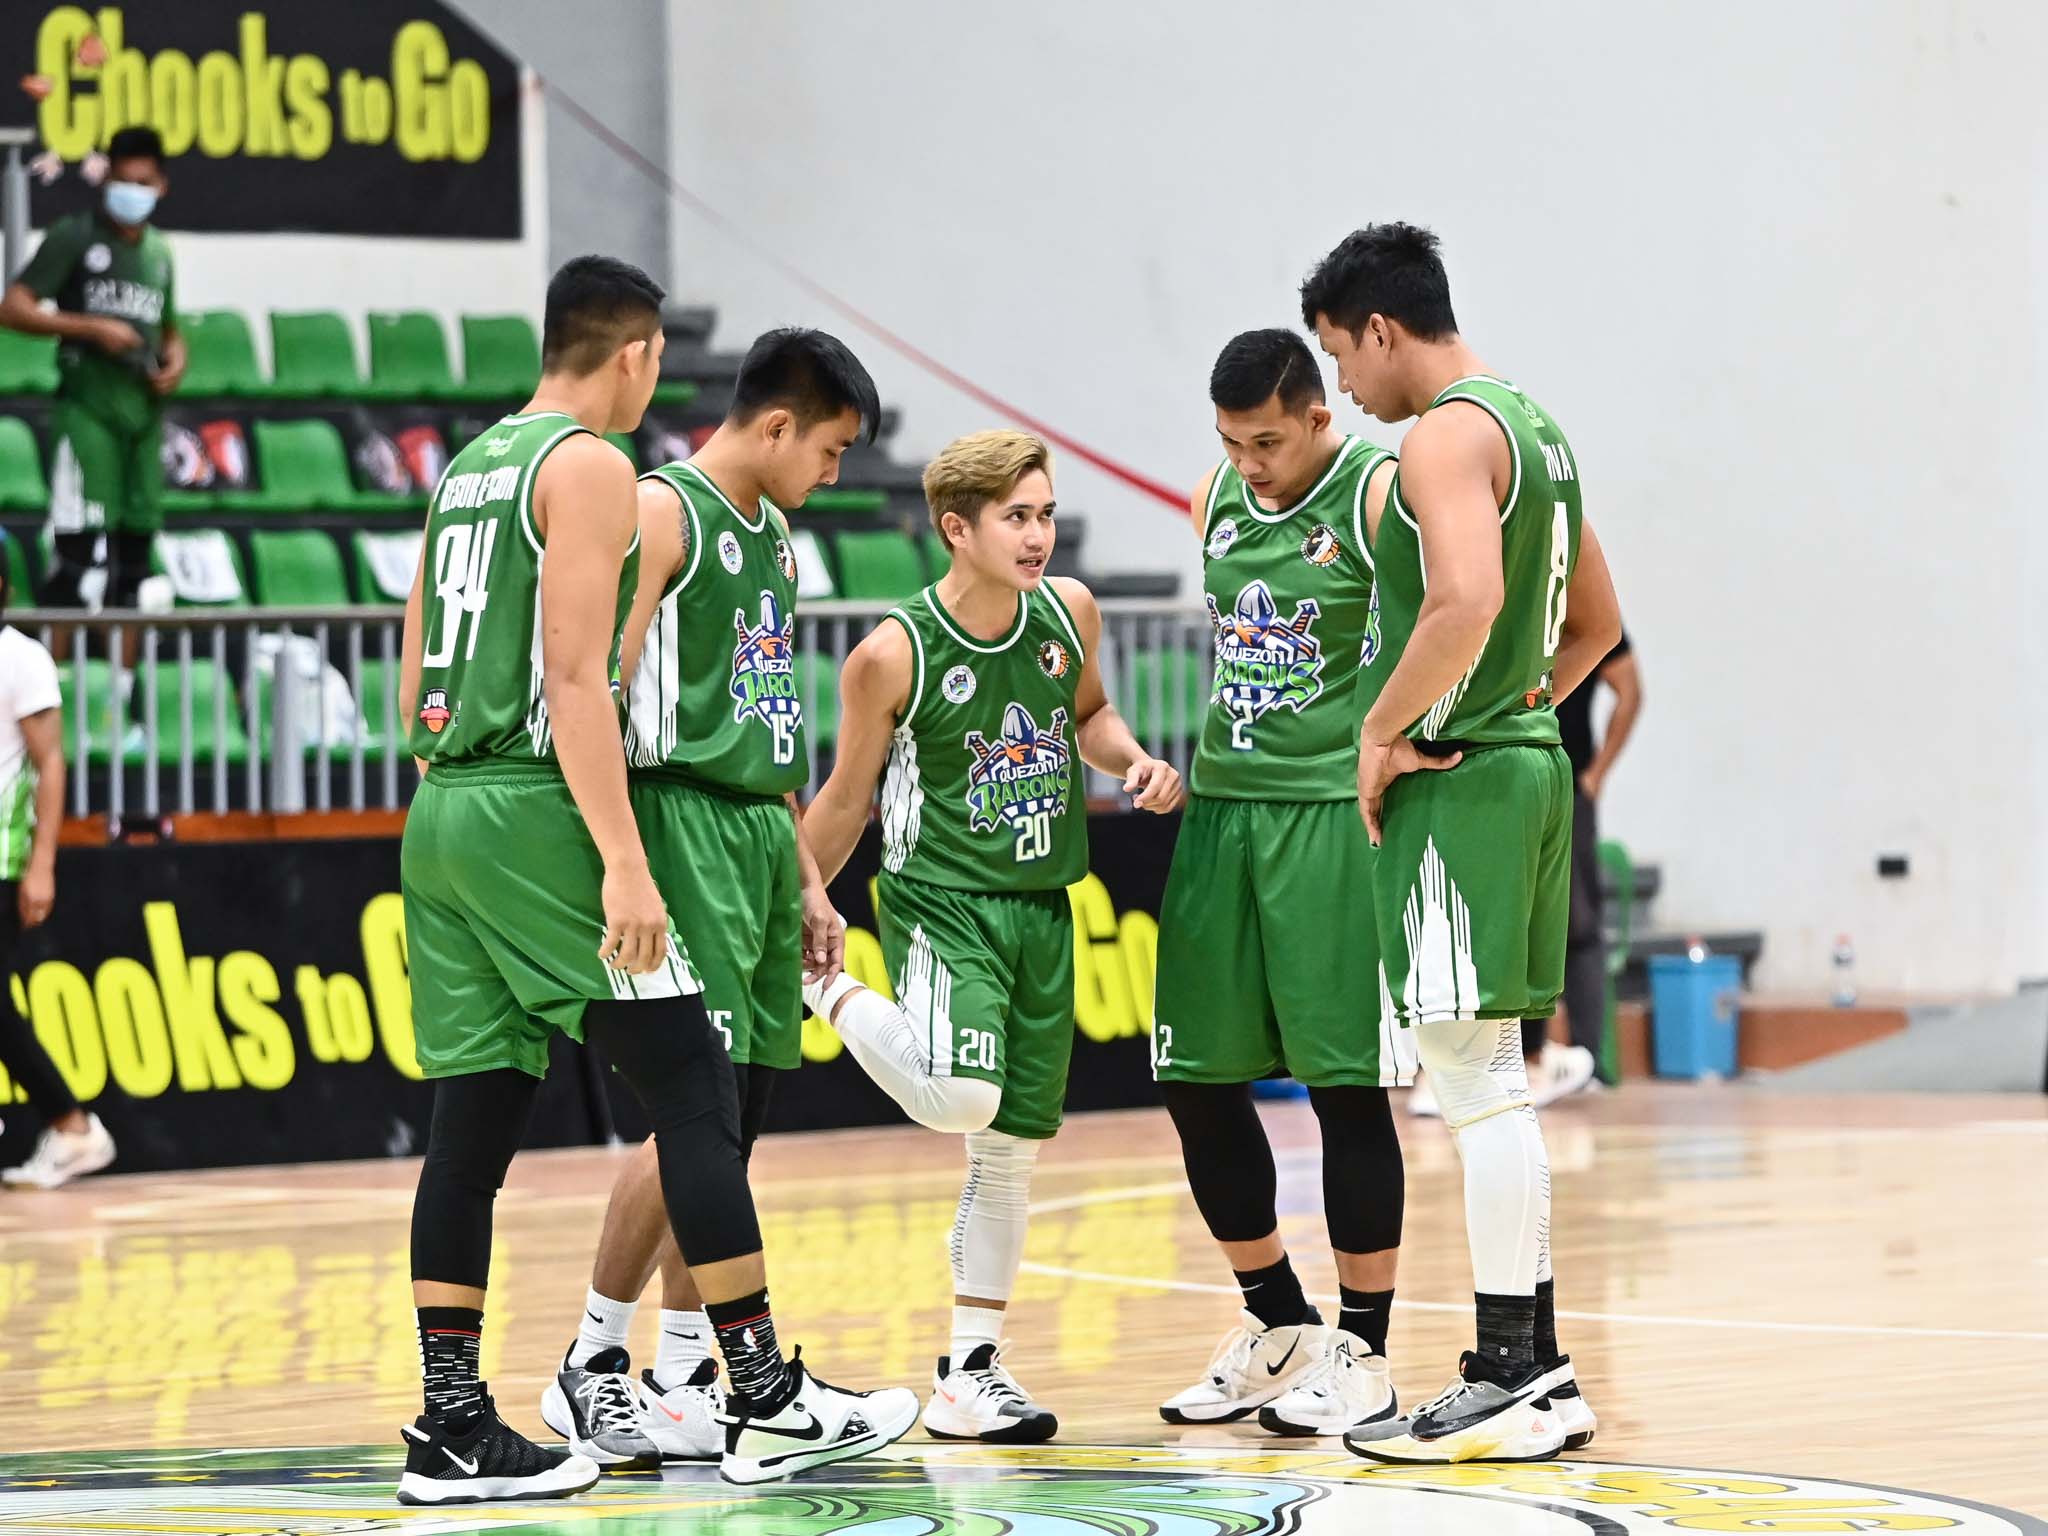 2021-Chooks-NBL-La-Union-vs-Quezon-Topeng-Lagrama NBL: Maynes powers La Union to emotional come-from-behind win vs Quezon Basketball NBL News  - philippine sports news